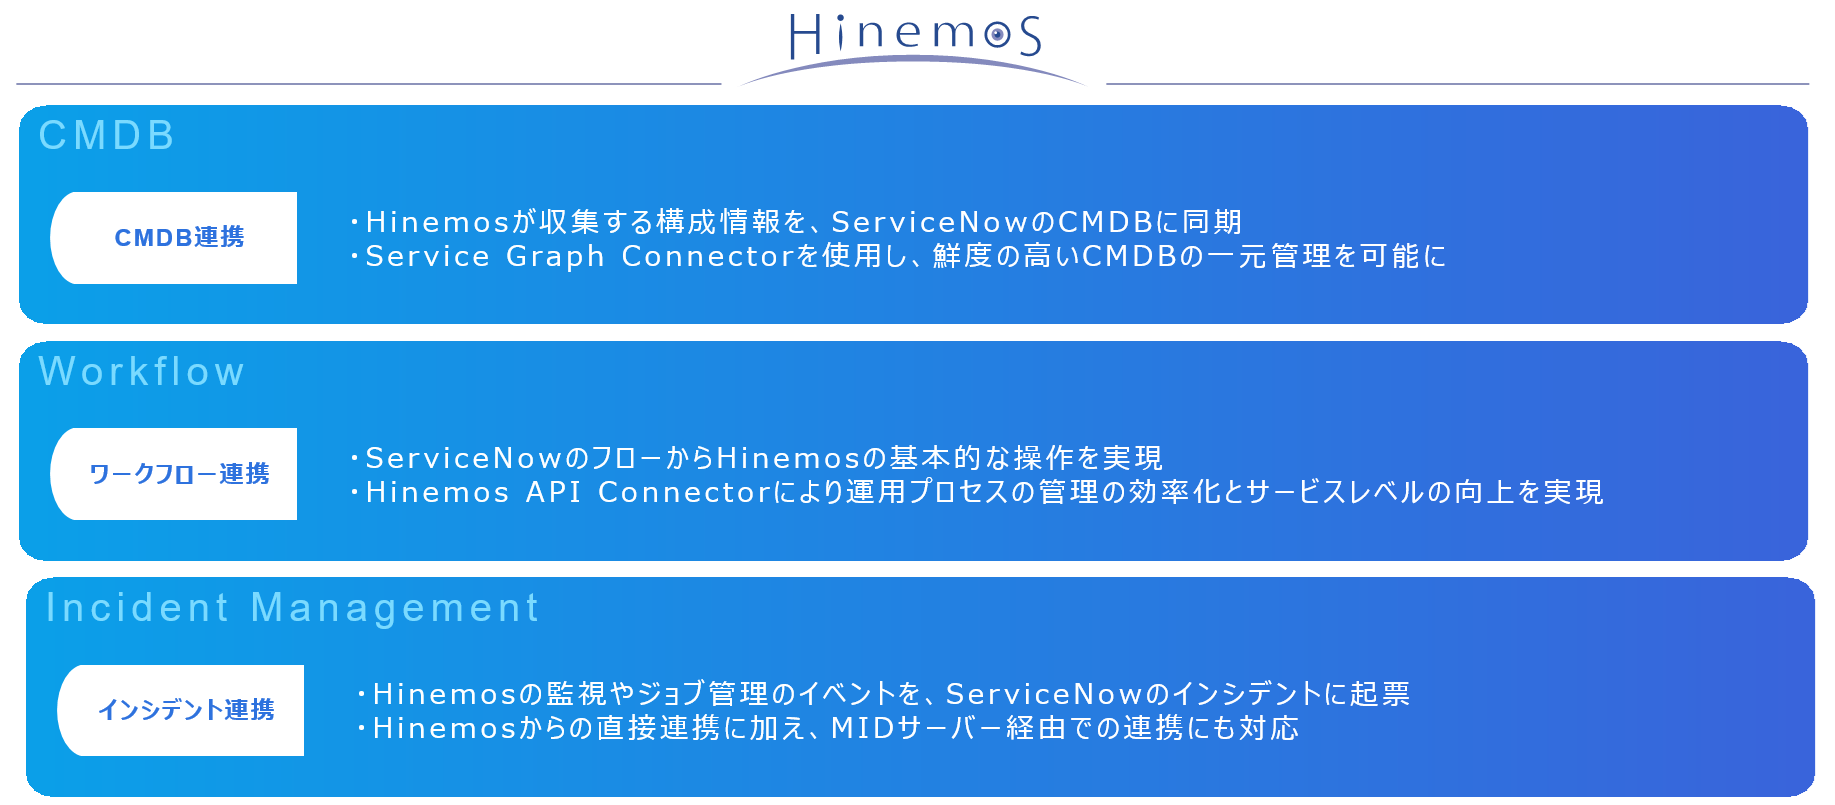 HinemosとServiceNowとの3つの連携